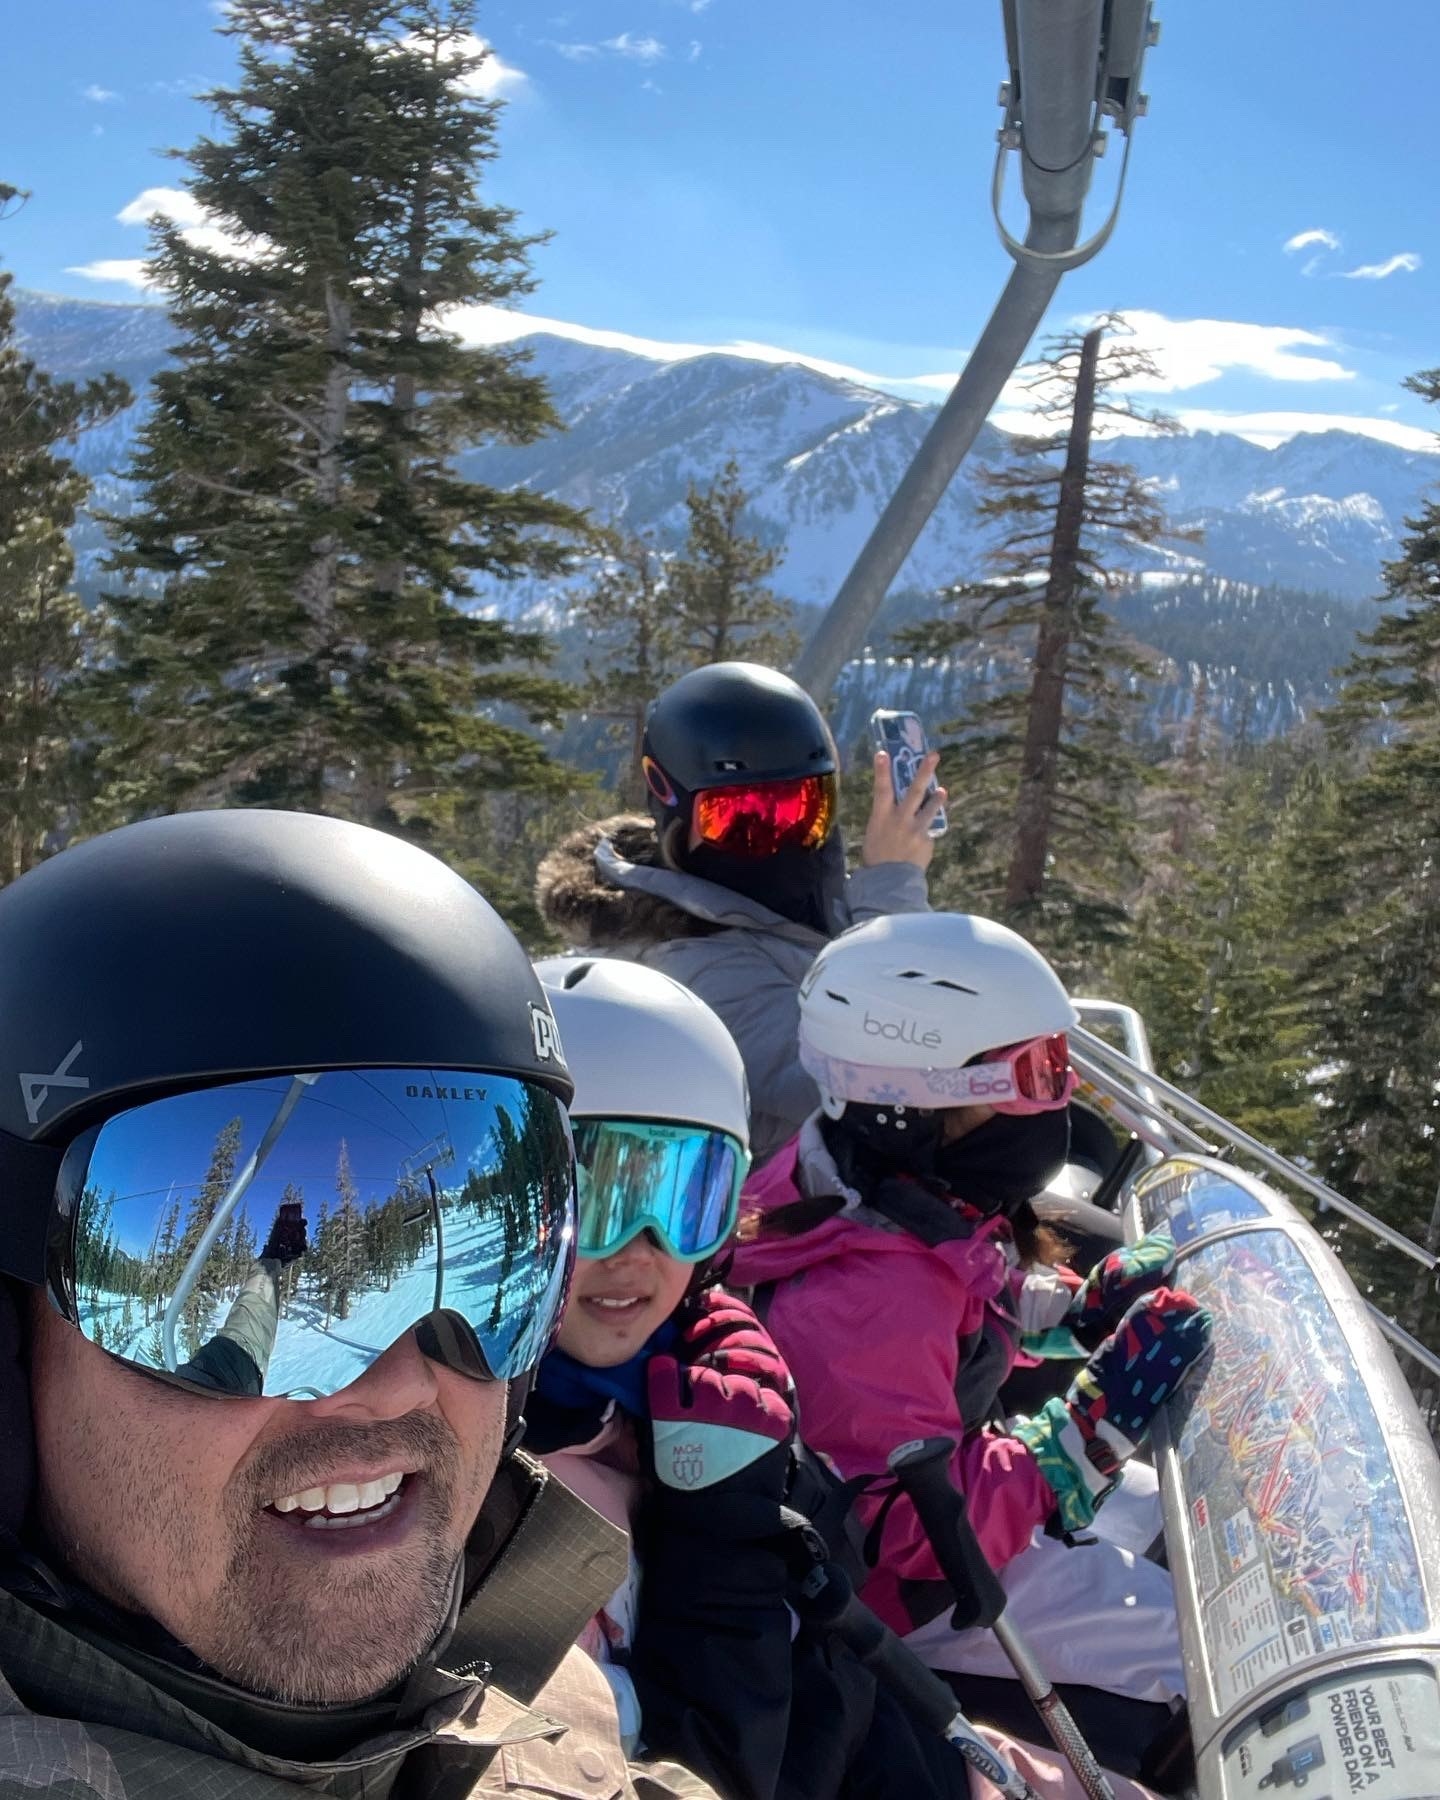 Family on a ski lift taking a selfie